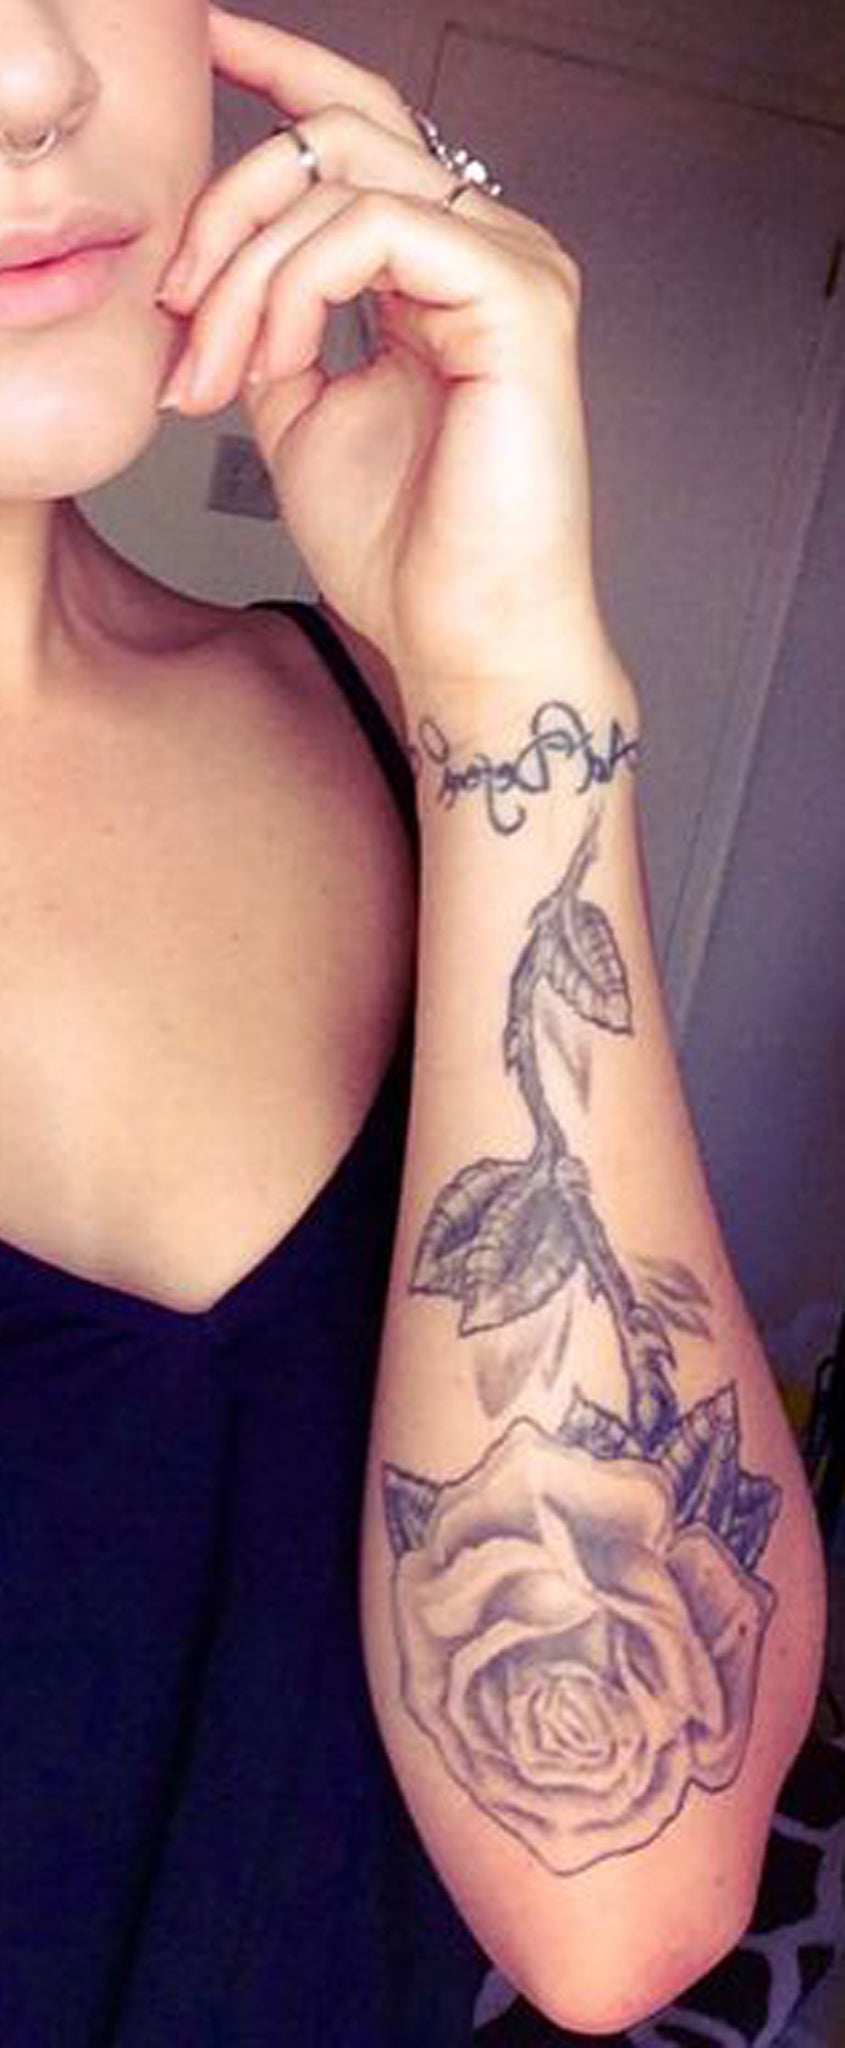 Single Black Rose Arm Sleeve Tattoo Ideas for Women - Vintage Realistic Forearm Tat -  ideas de tatuaje de antebrazo rosa - www.MyBodiArt.com